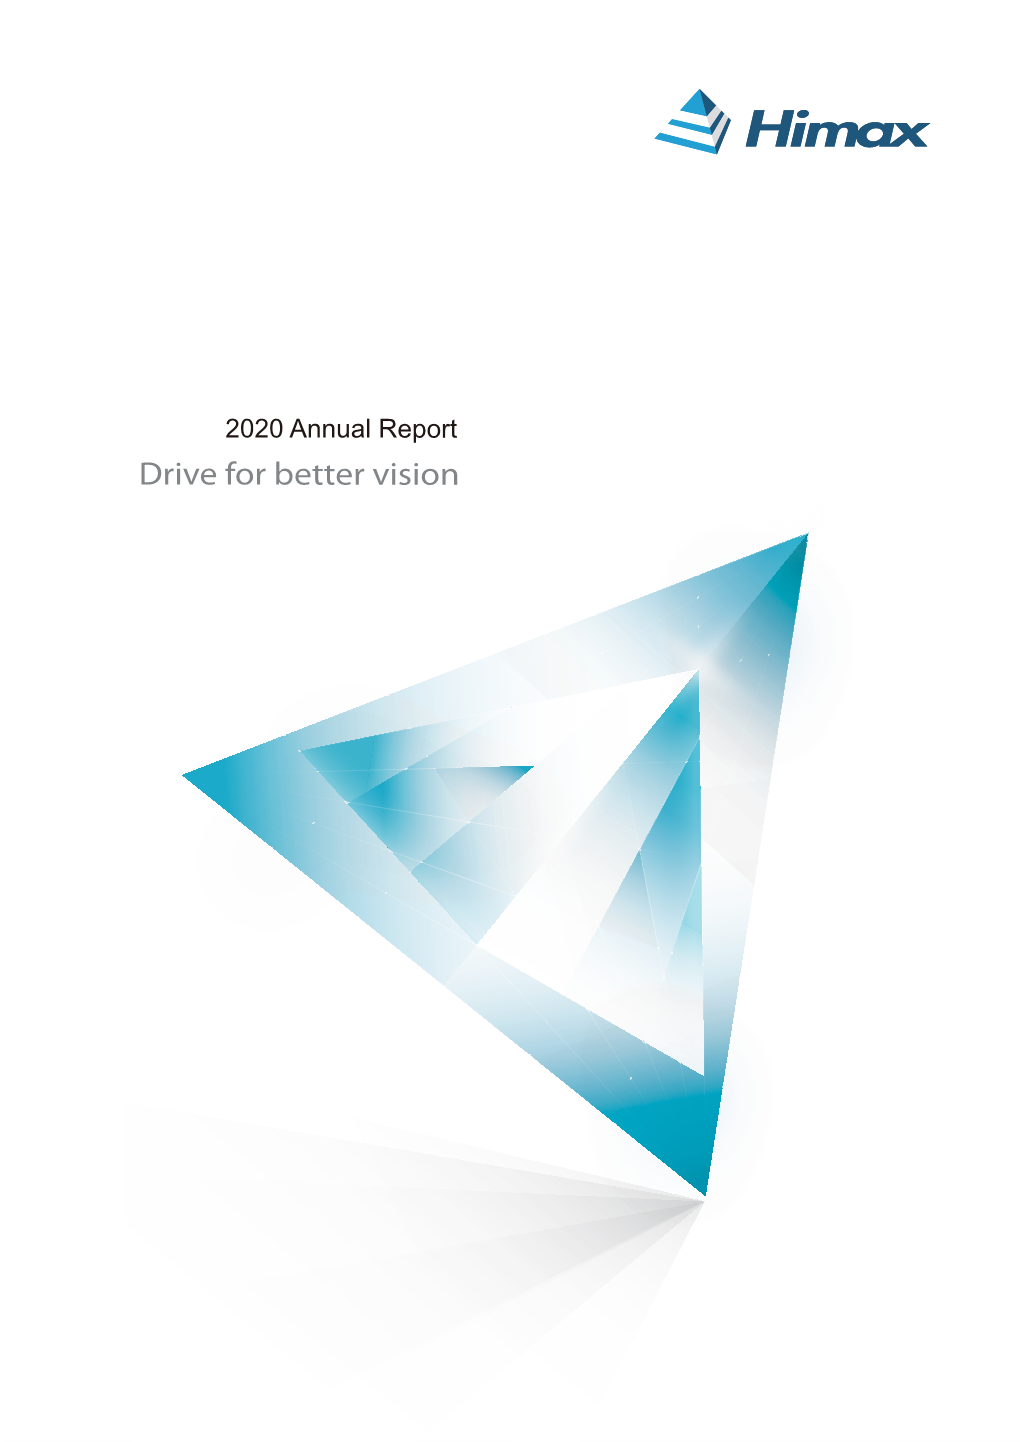 2020 Annual Report Dear Shareholders